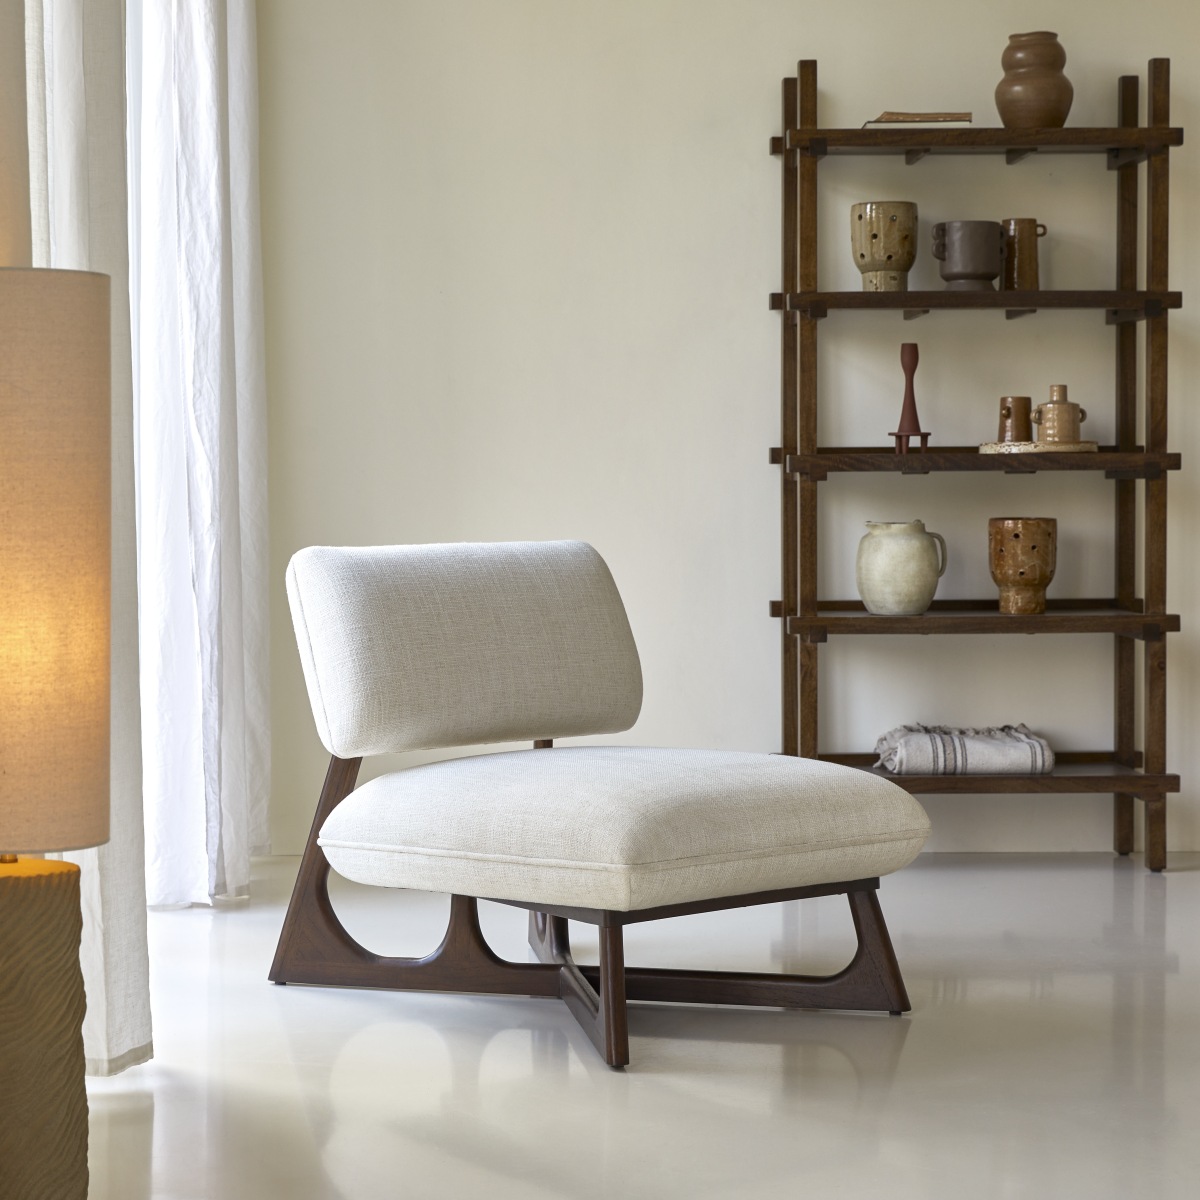 Brune - Niedriger Sessel aus massivem Mindiholz und ecrufarbenem Stoff